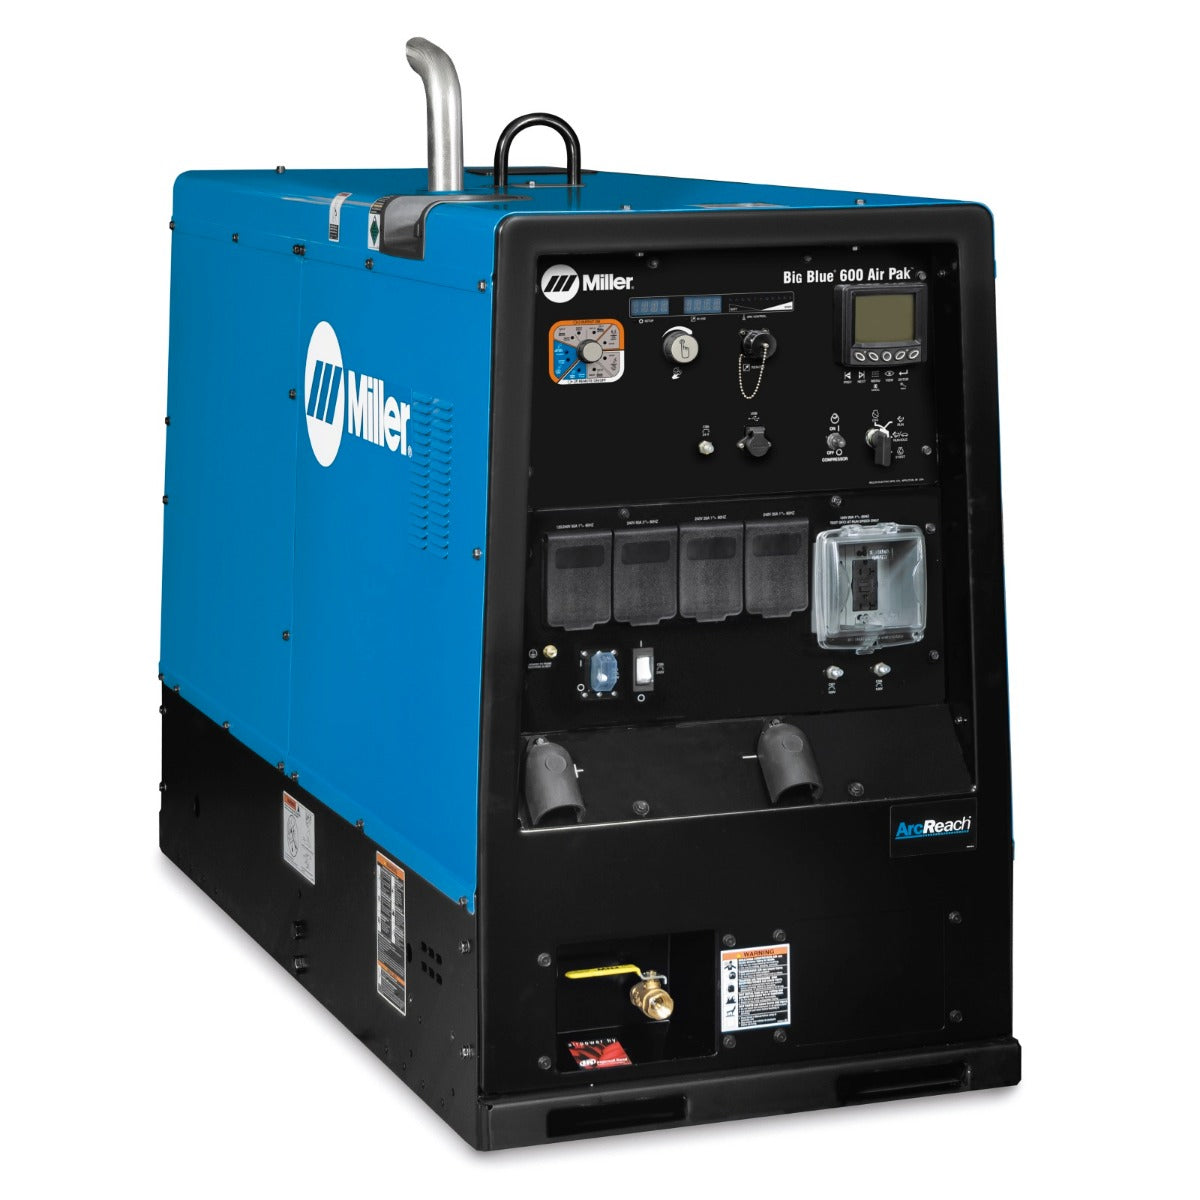 Miller Big Blue 600 Air Pak Welder/Generator w/ArcReach - 907750